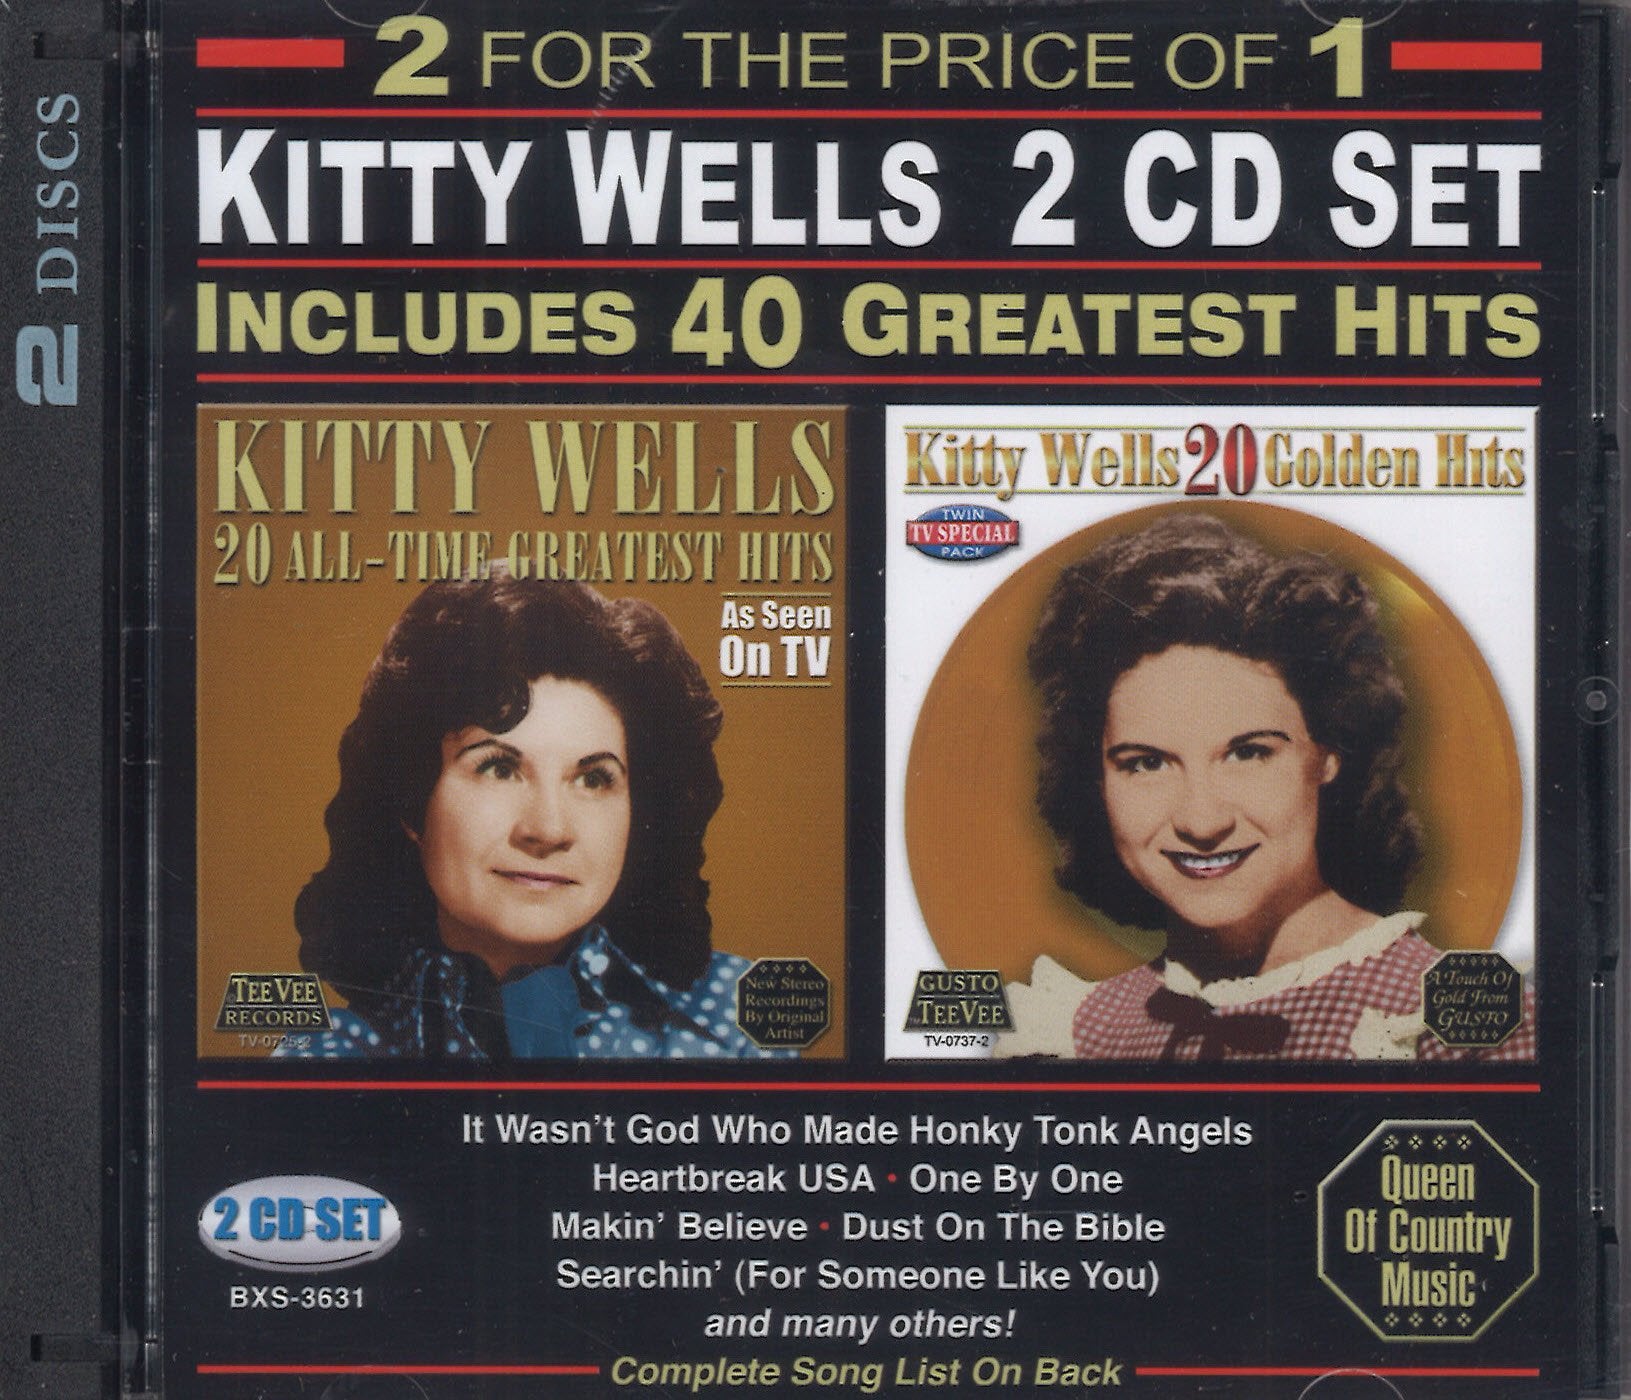 Kitty Wells: 2 CD Set